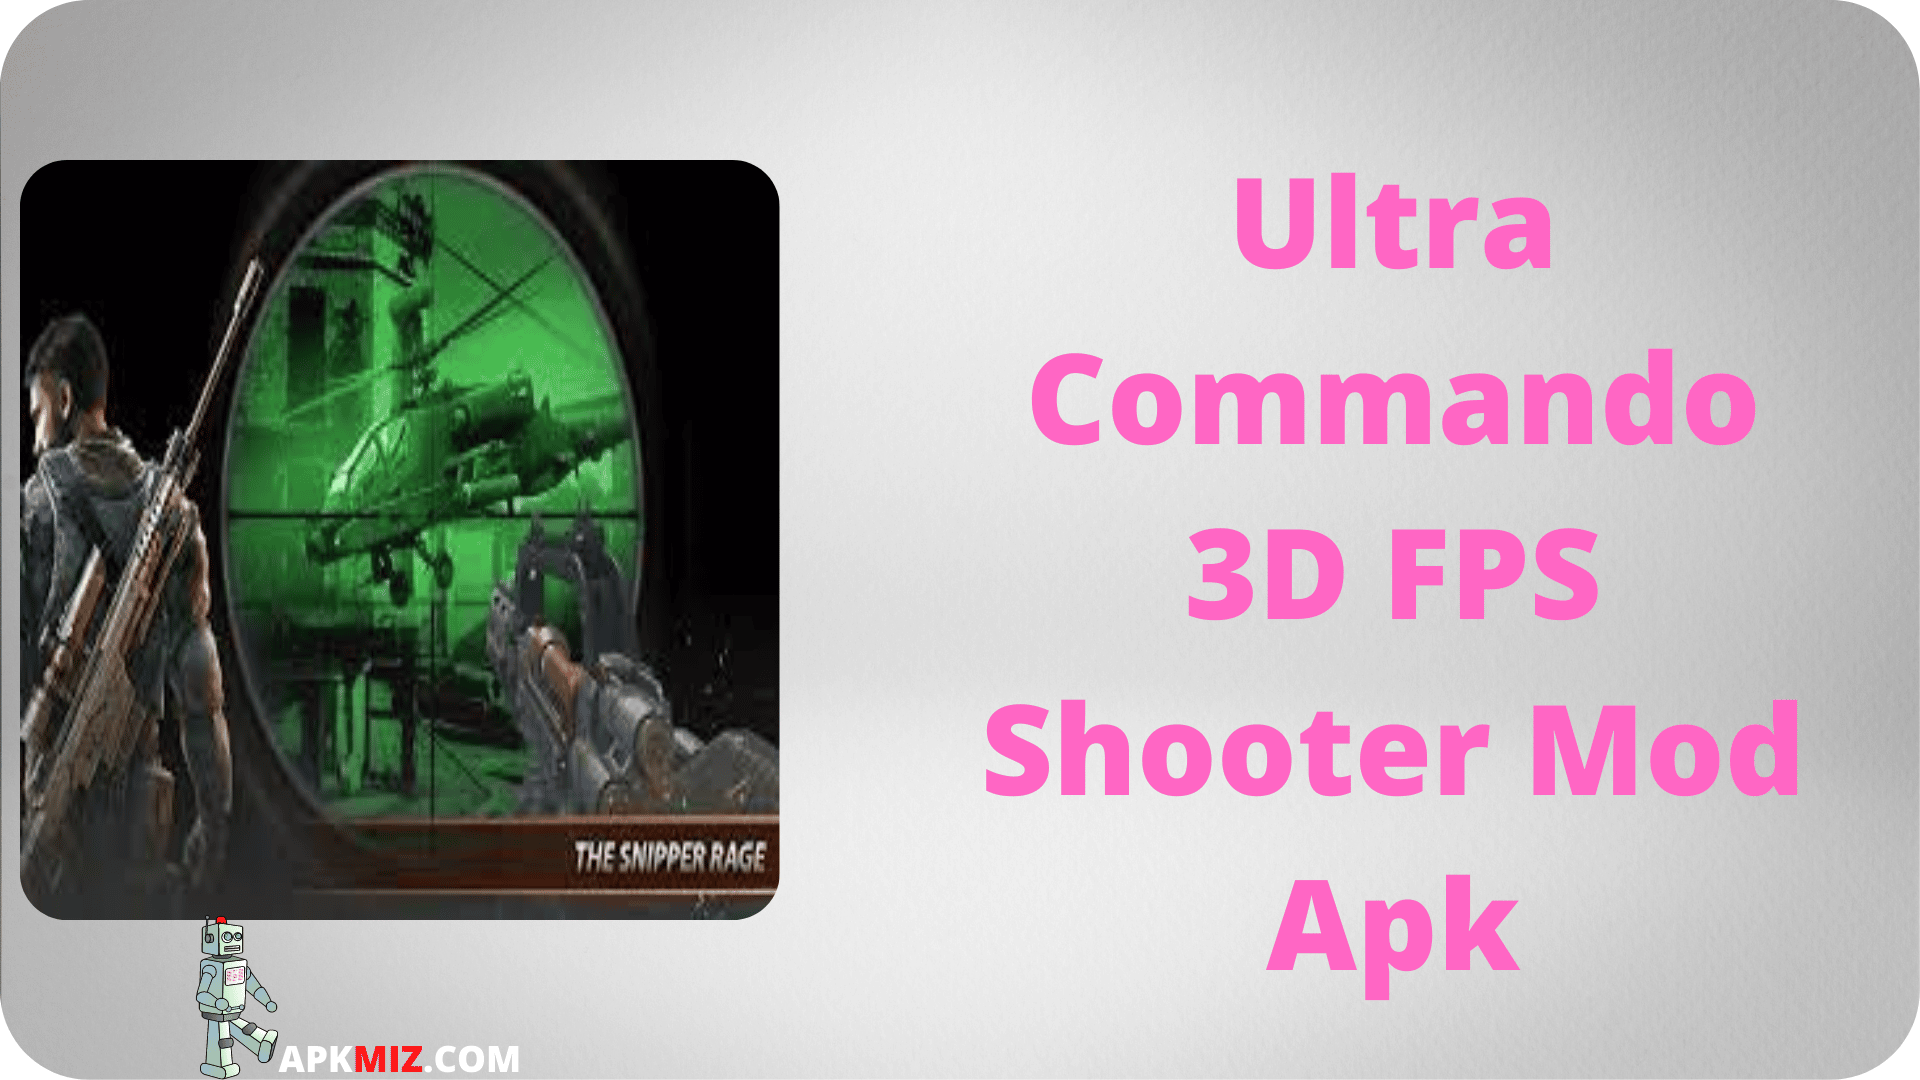 Ultra Commando 3D FPS Shooter Mod Apk